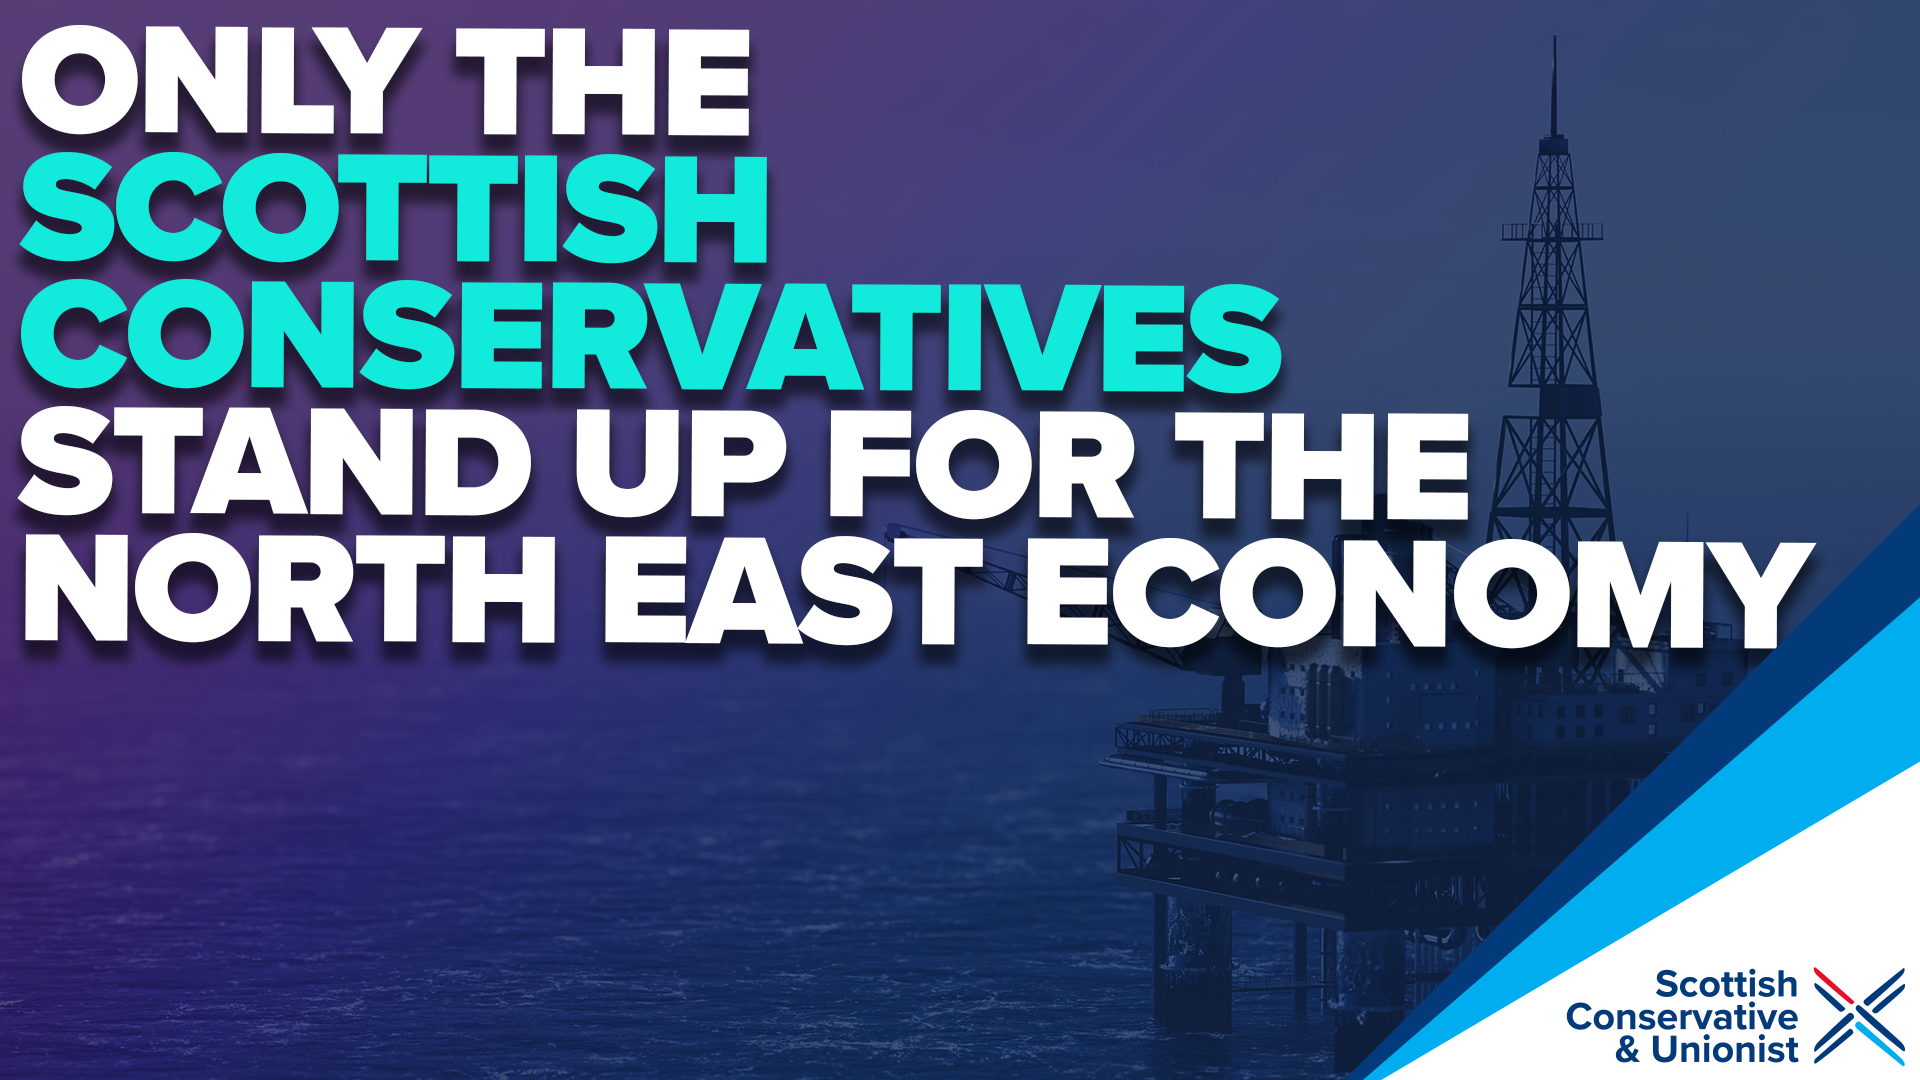 ne economy Quick guide to key Scottish Conservative policies